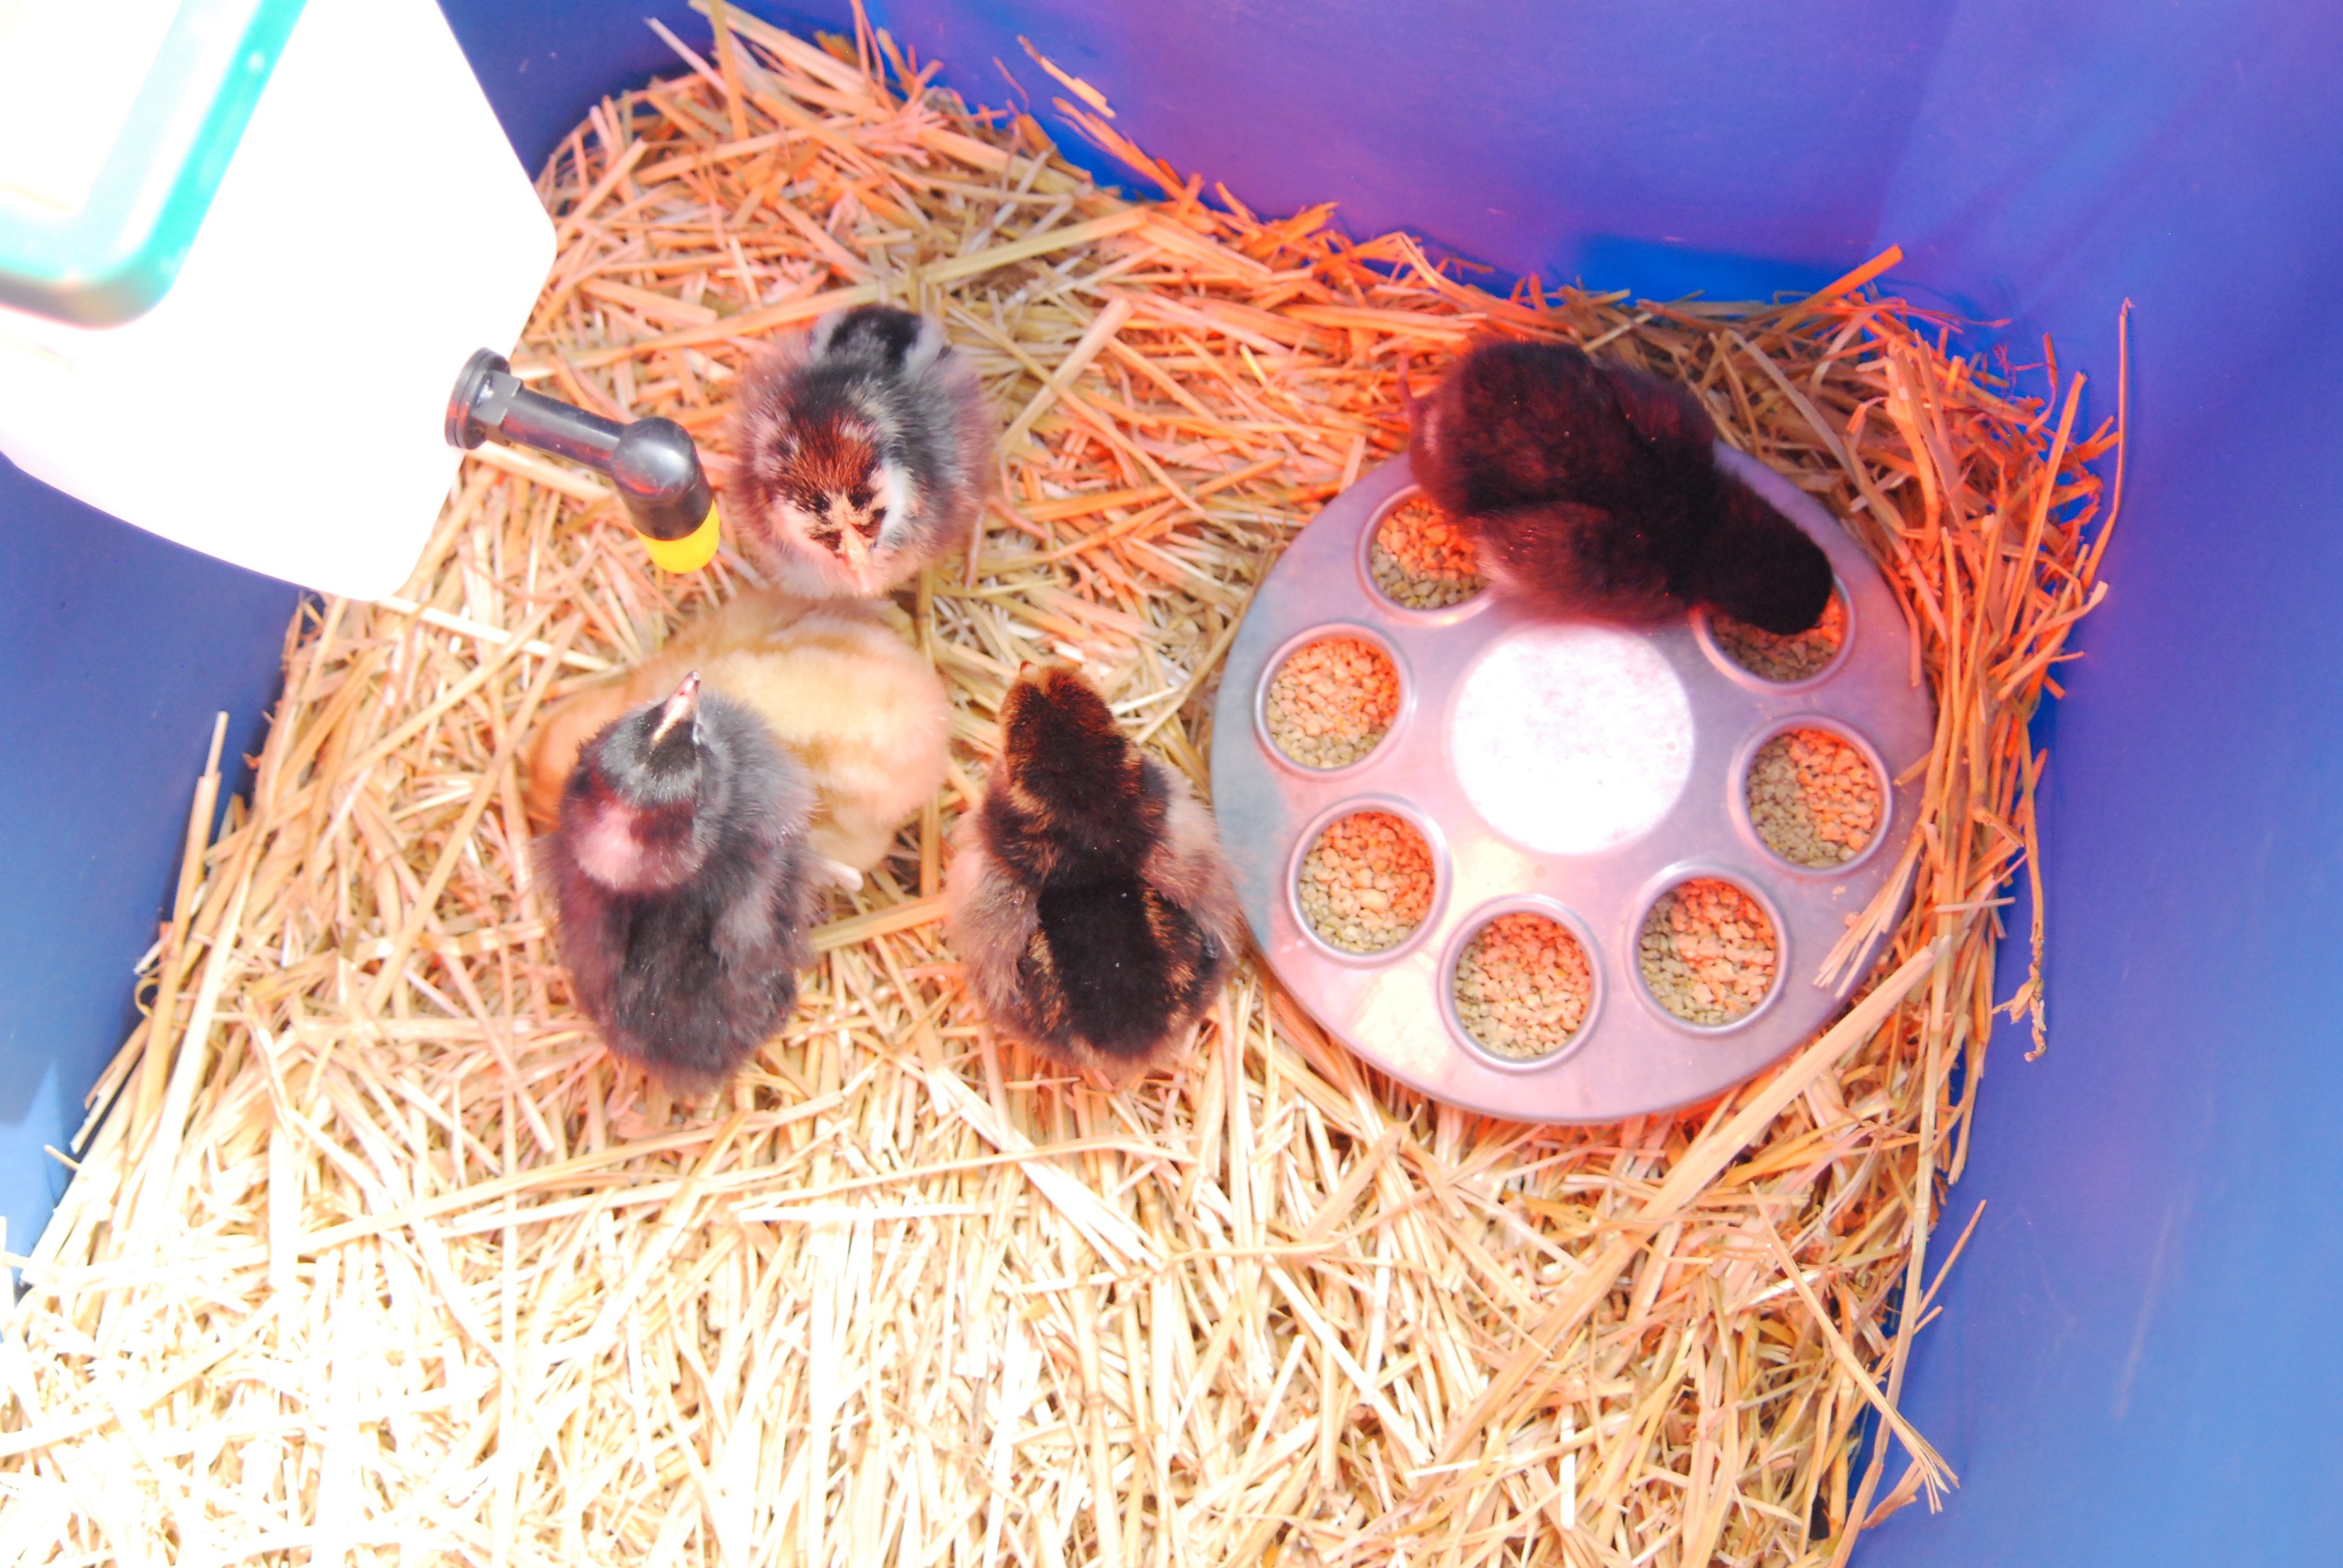 Chicks in brooder